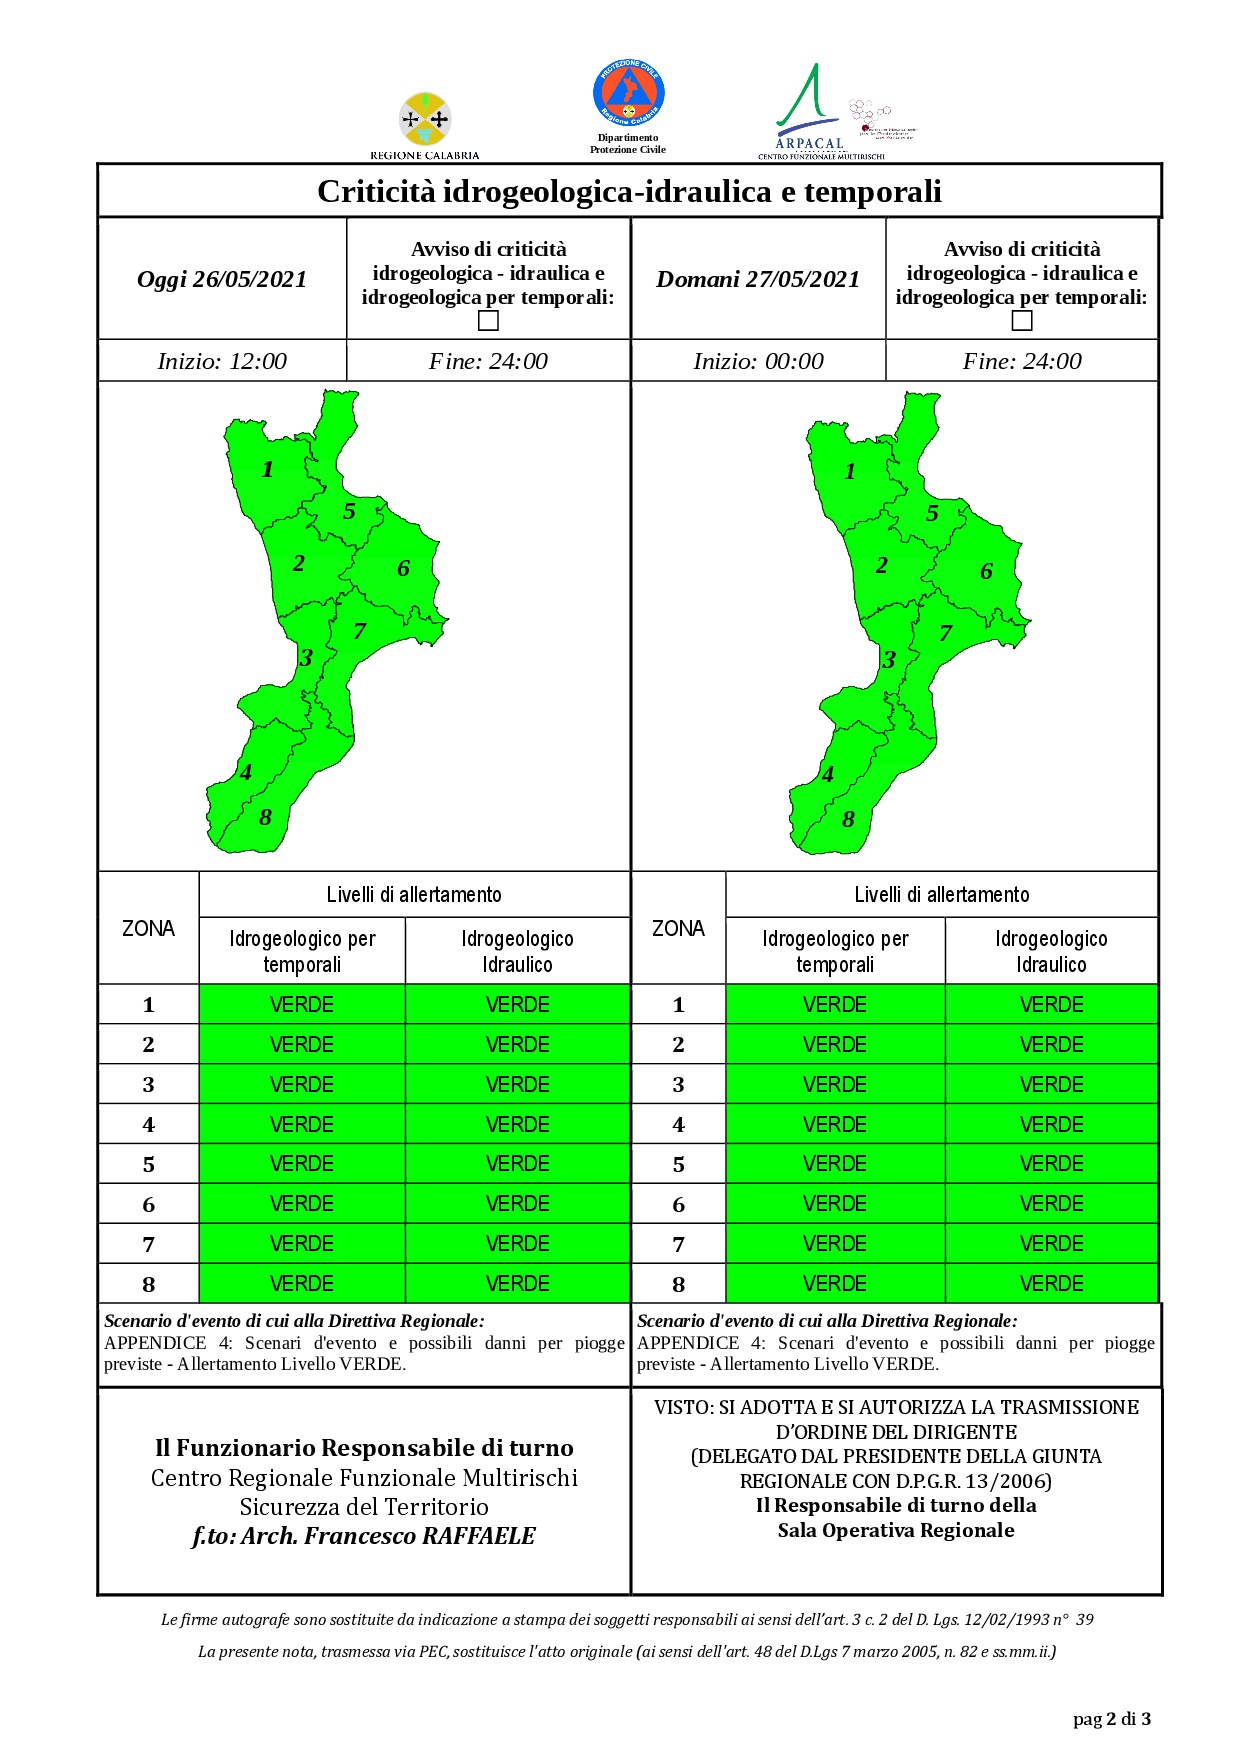 Criticità idrogeologica-idraulica e temporali in Calabria 26-05-2021